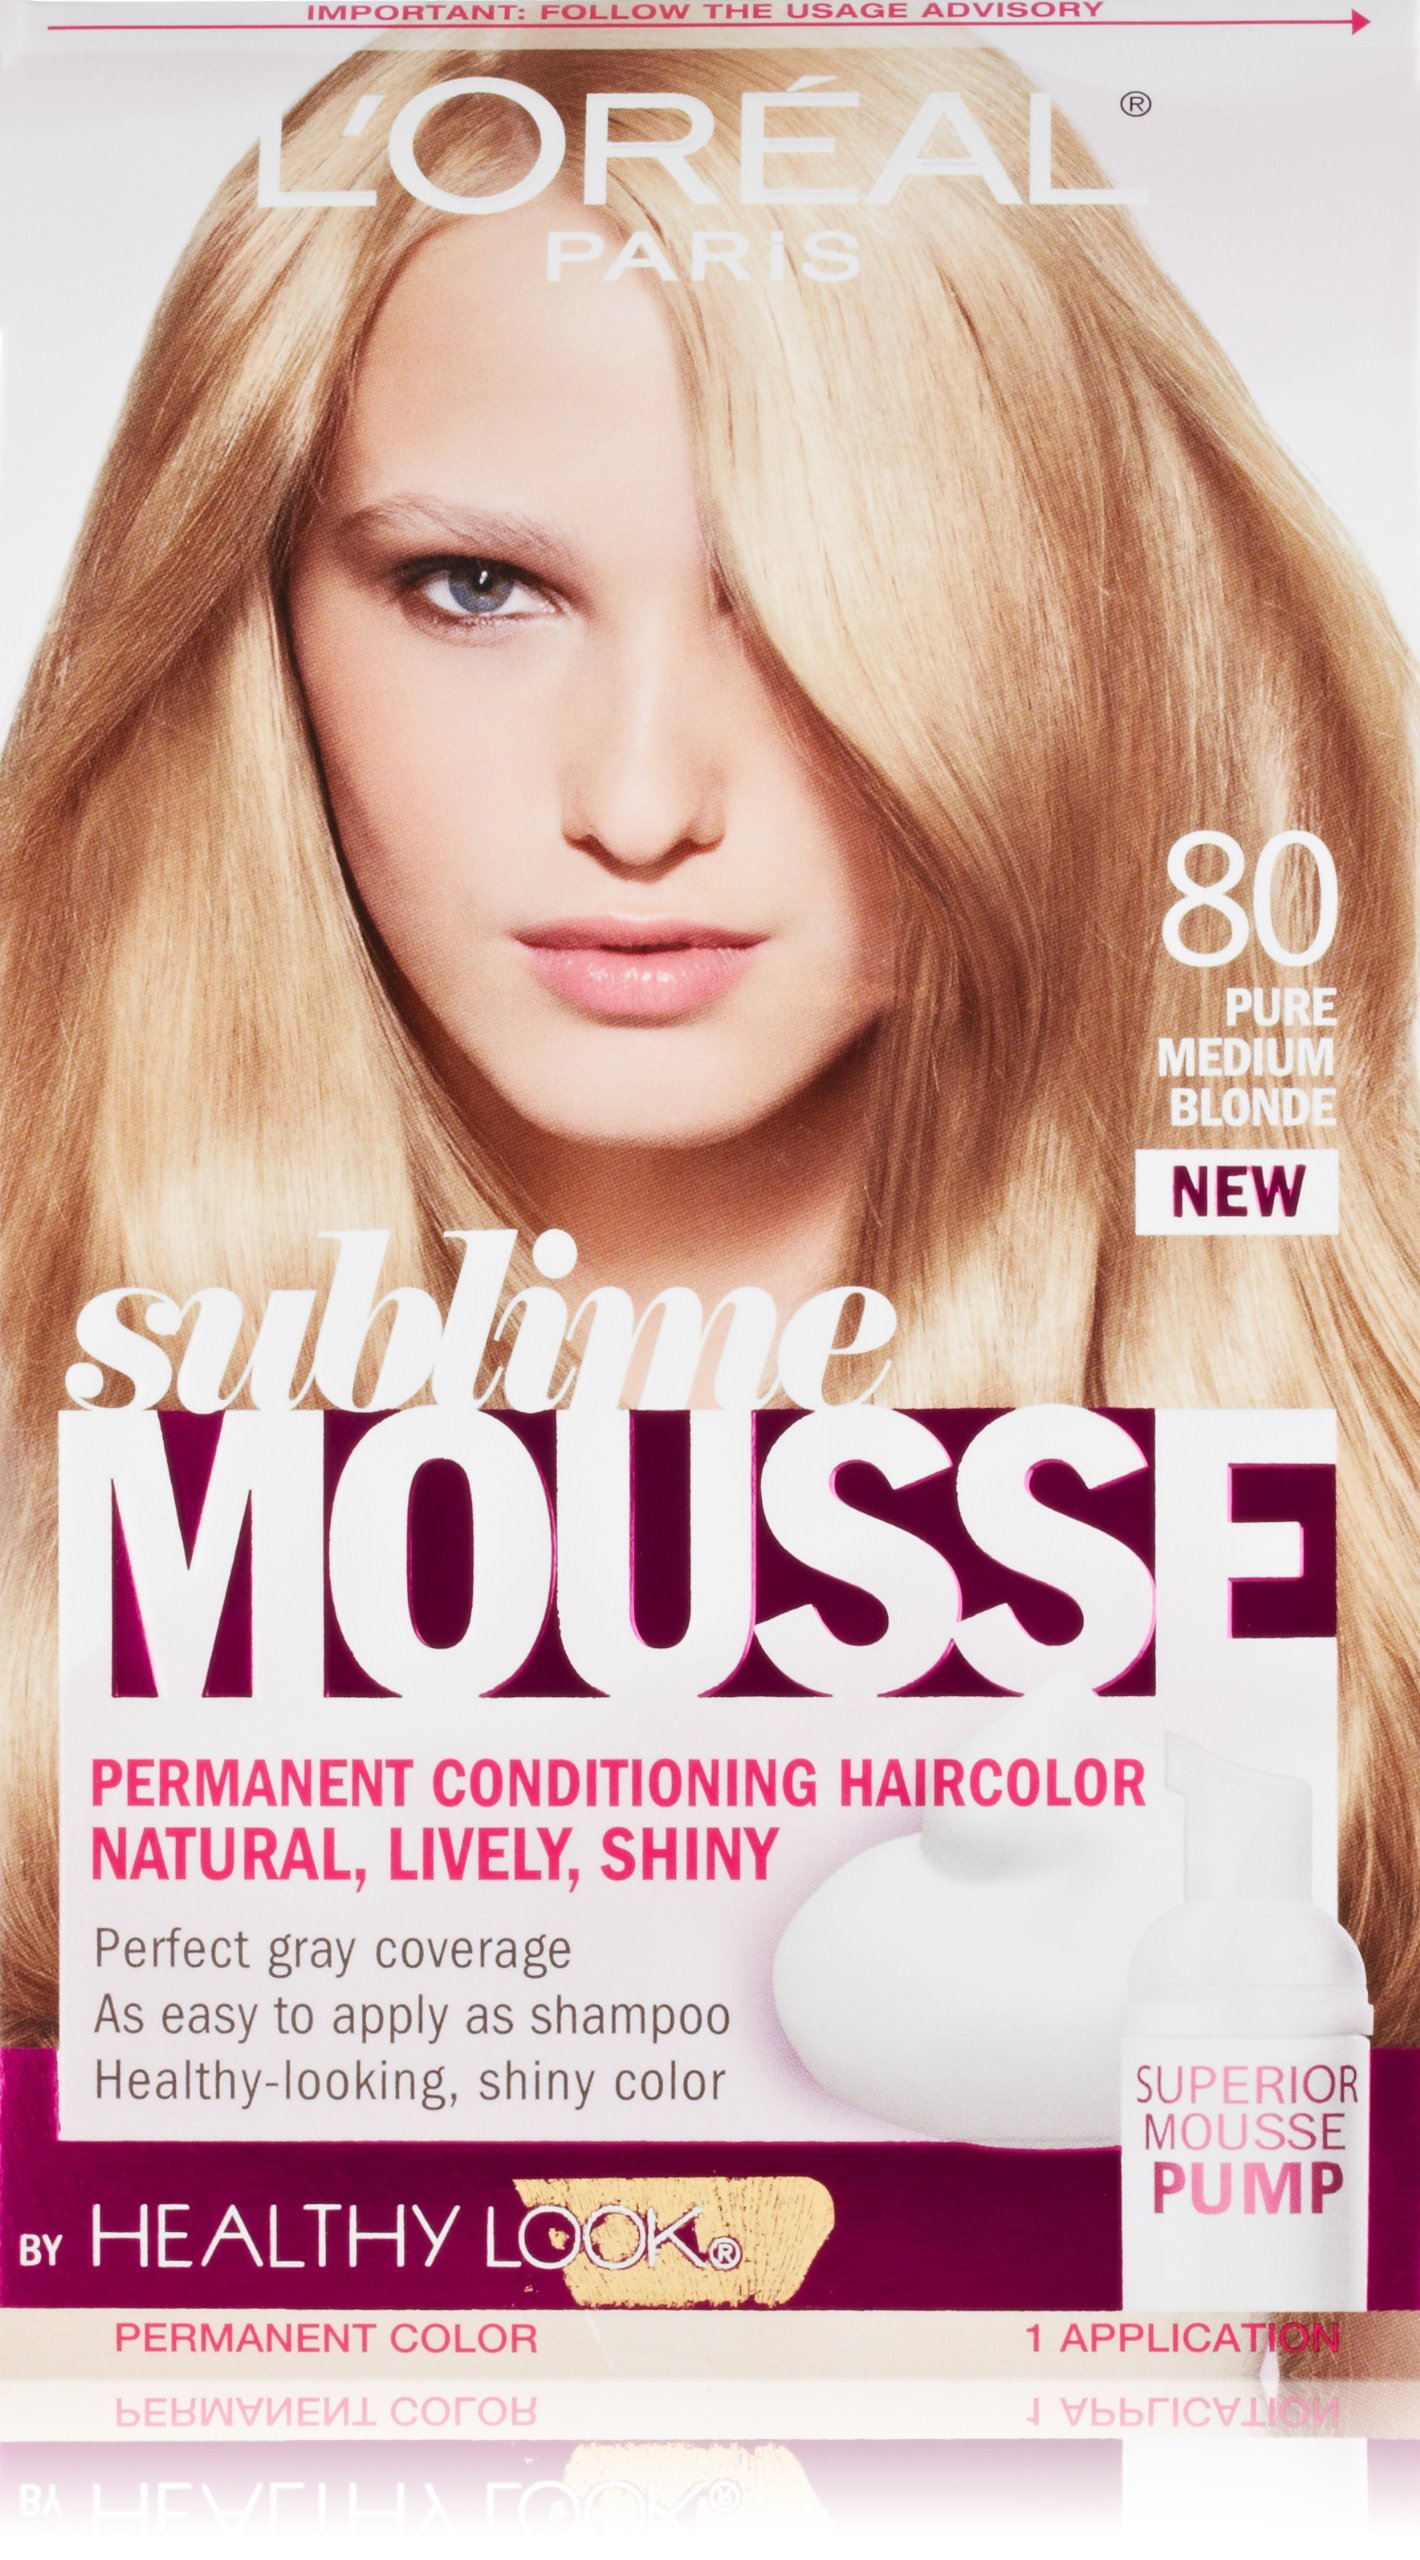 L'Oreal Paris Sublime Mousse by Healthy Look Hair Color, 80 Pure Medium Blonde